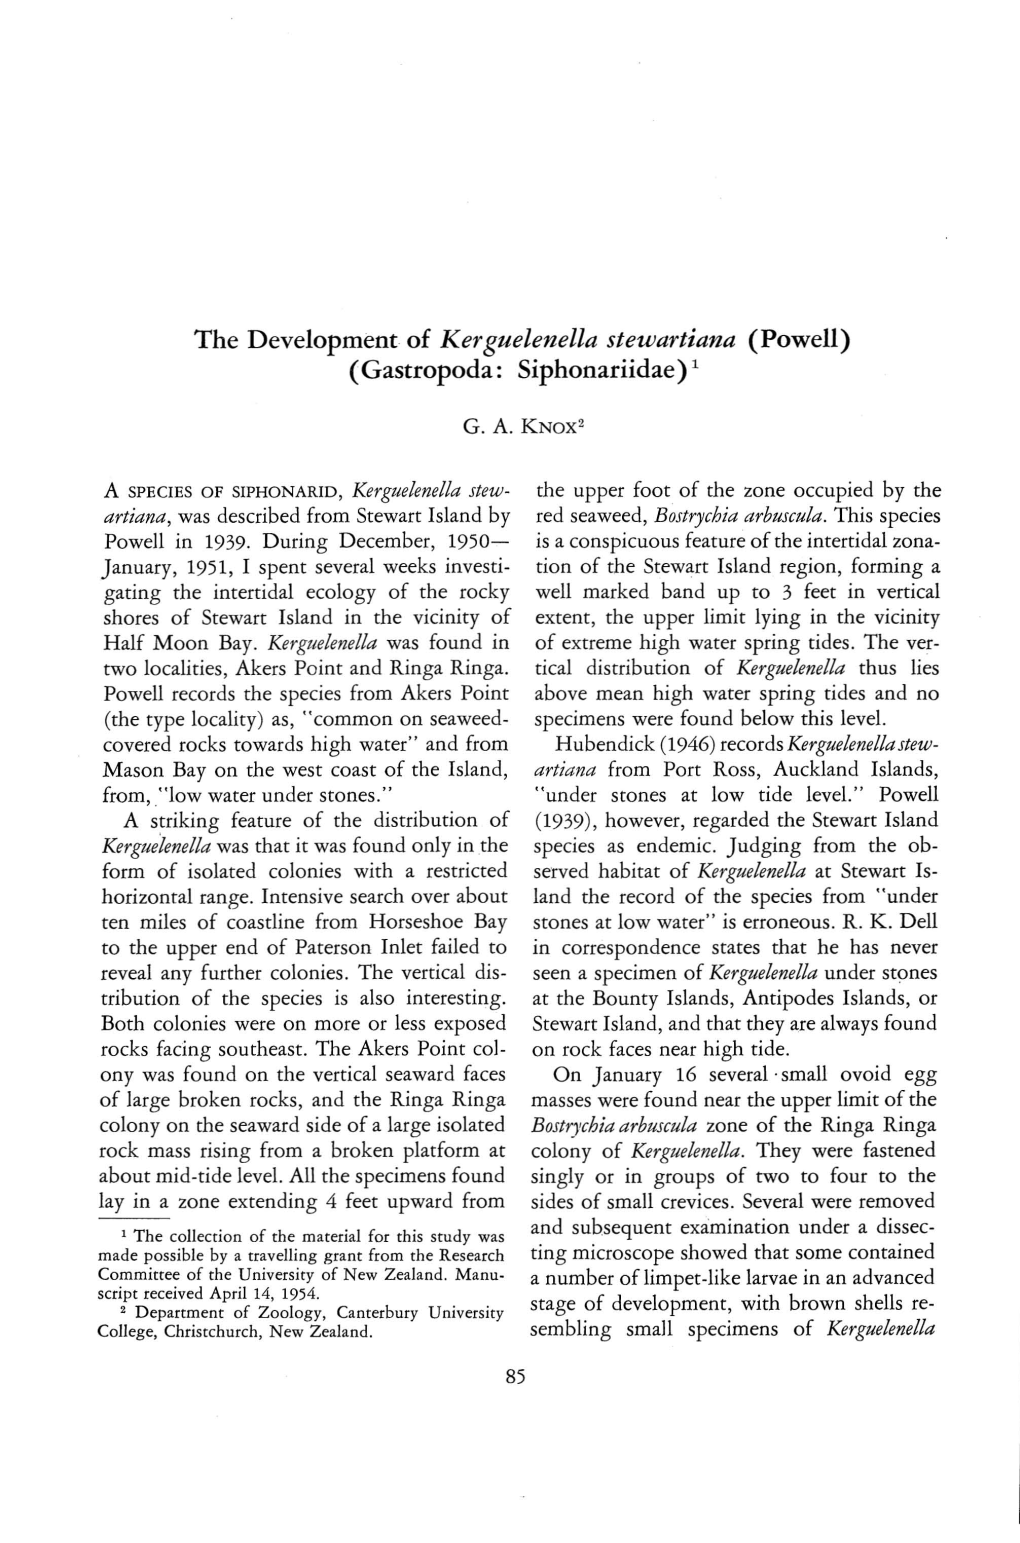 The Development of Kerguelenella Stewartiana (Powell) (Gastropoda: Siphonariidae) 1